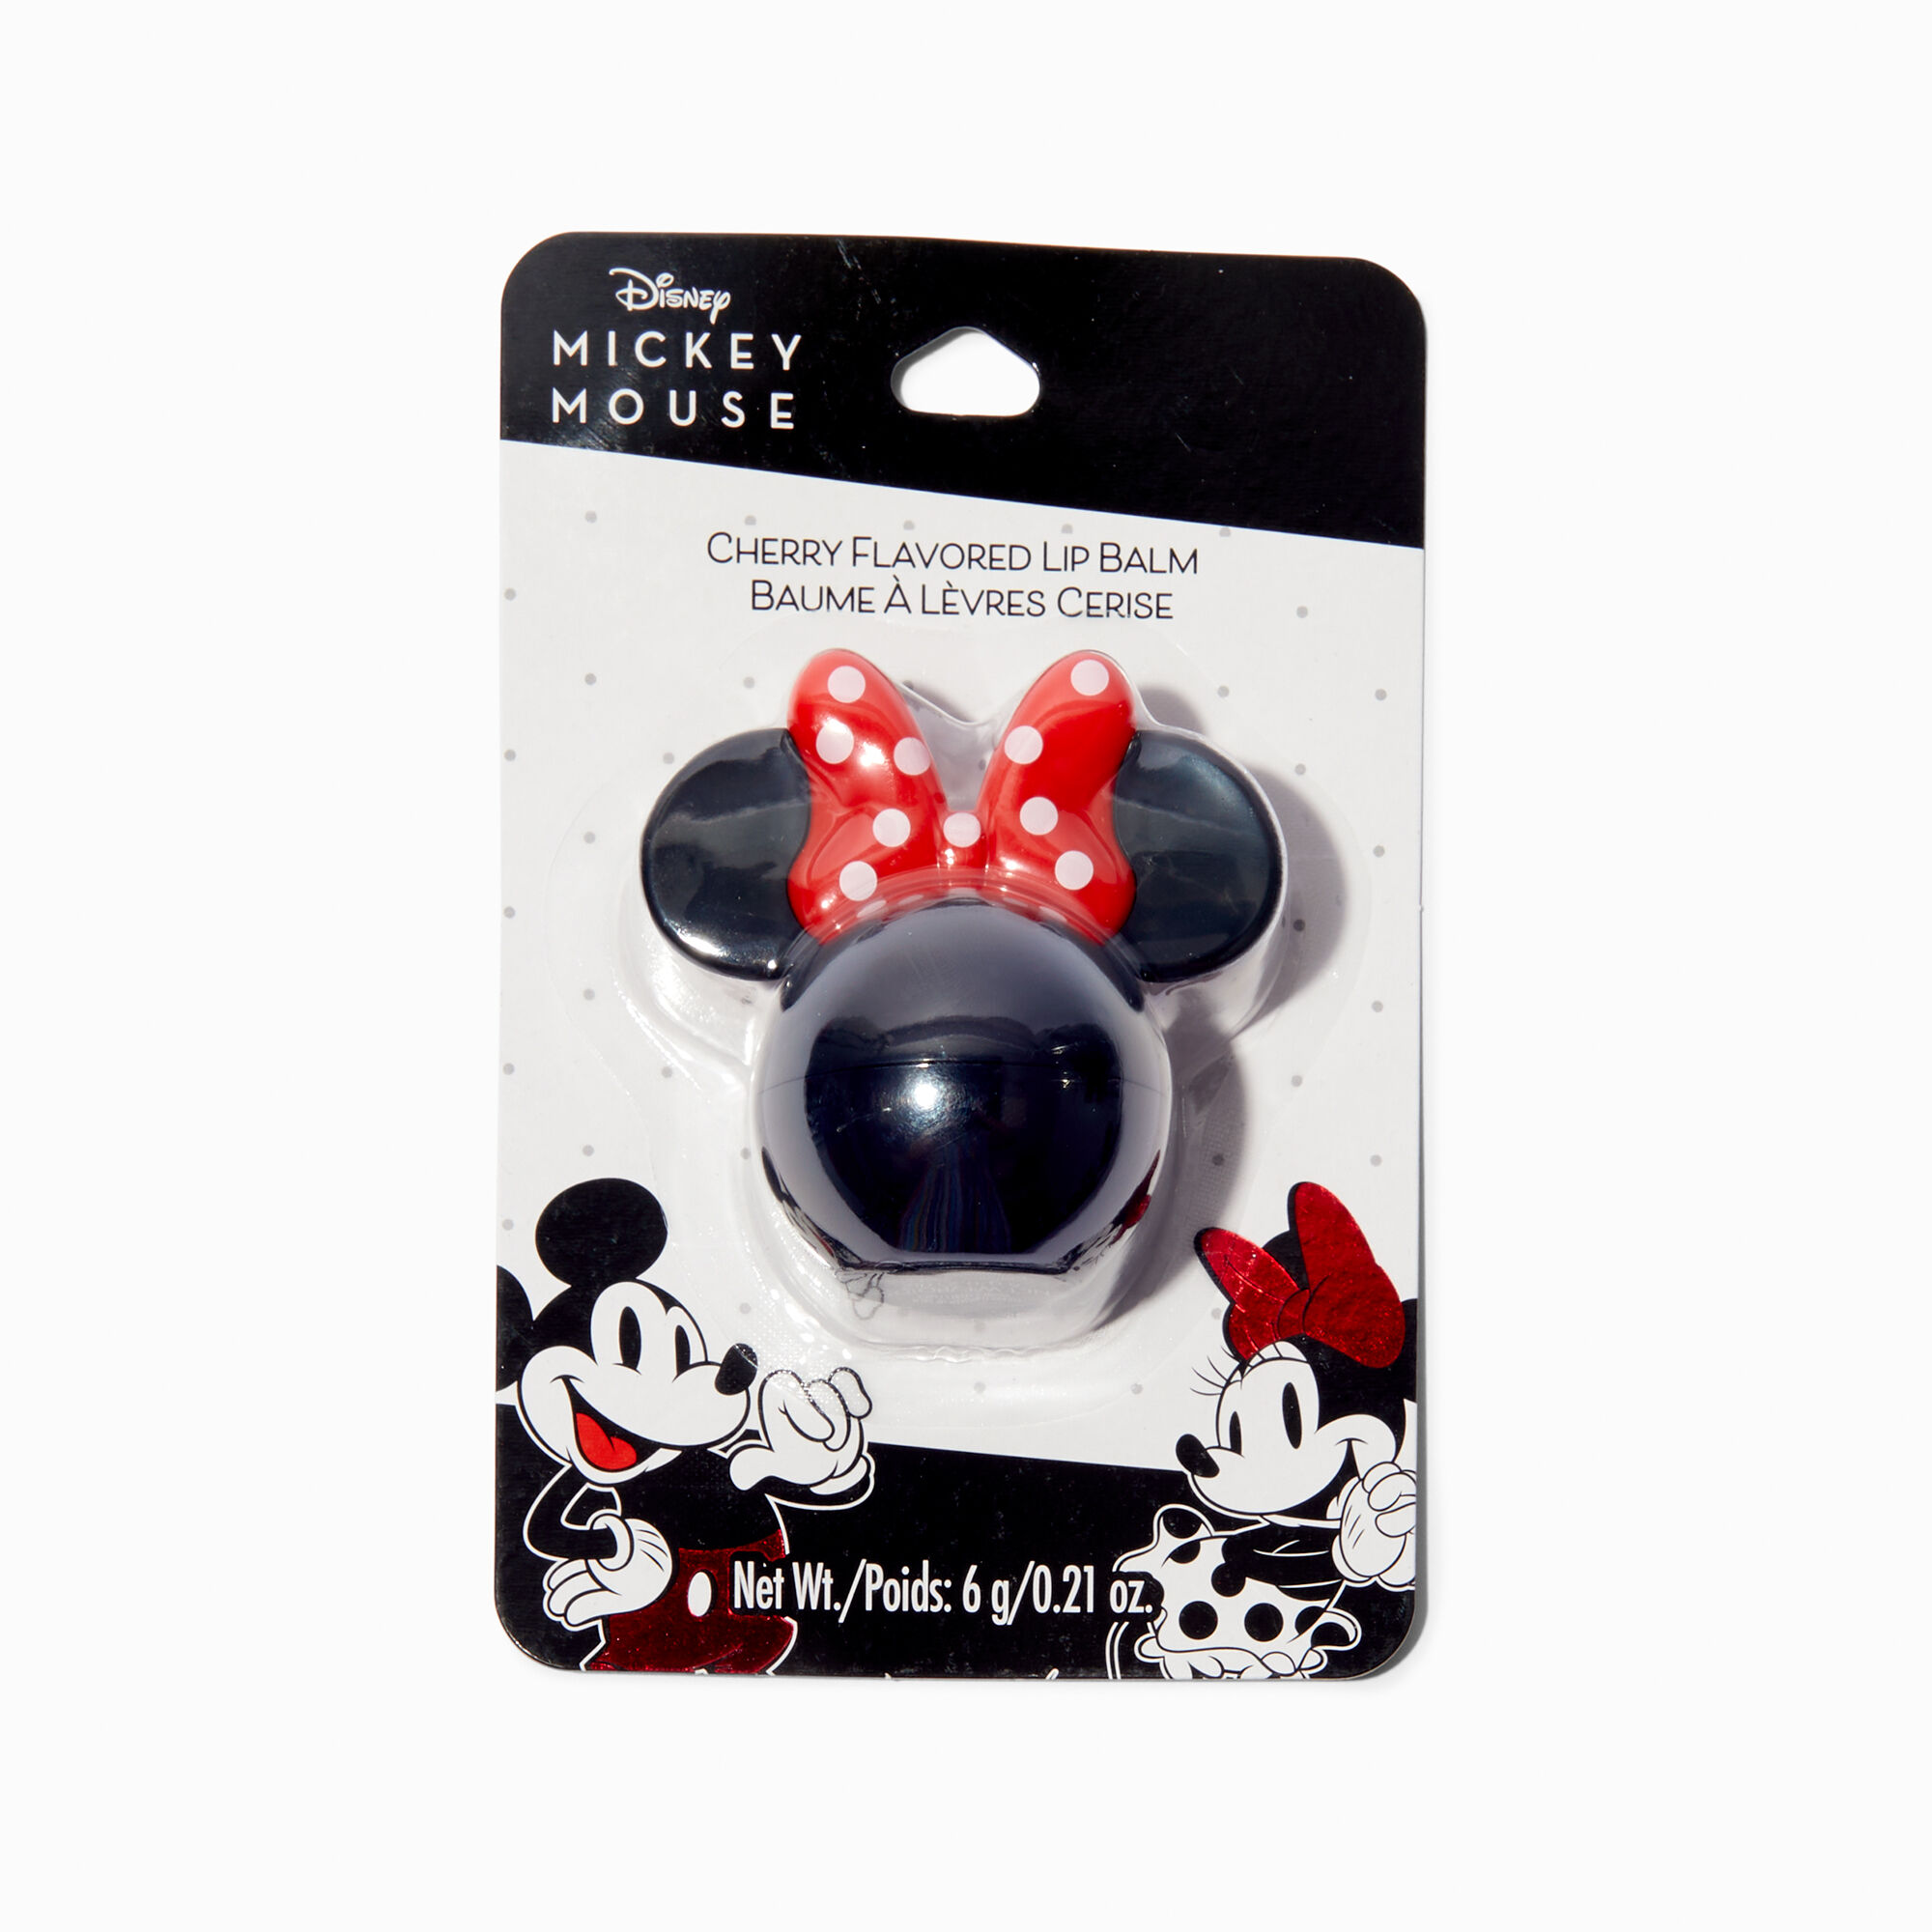 View Claires Disney Minnie Mouse Cherry Lip Balm information